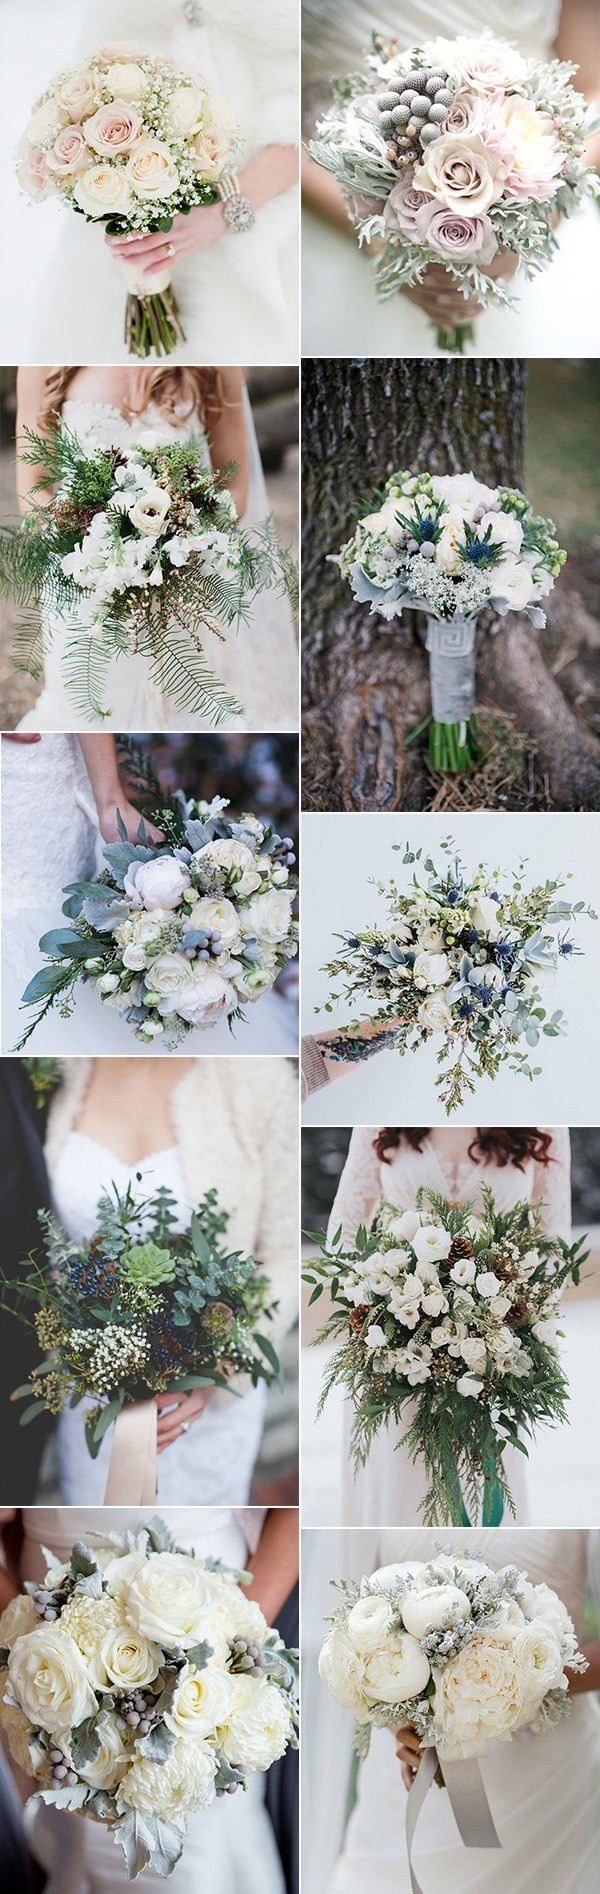 winter wedding bouquet ideas